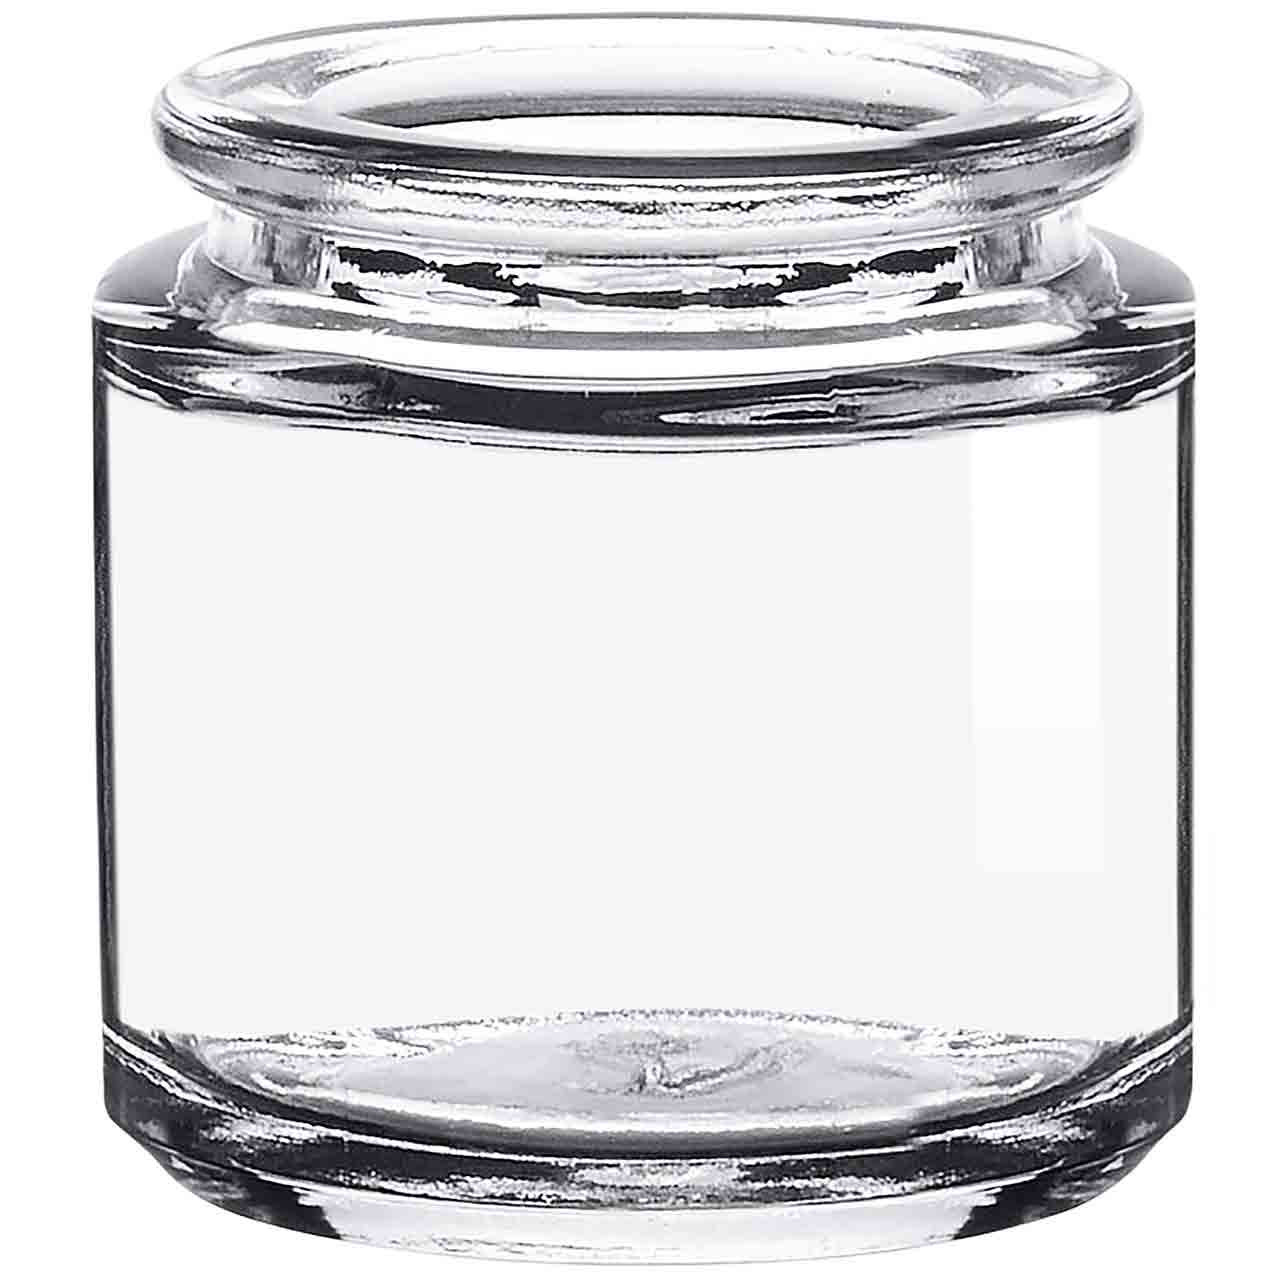 16oz. Authentic Jar Recycled Glass With Cork - Glassnow